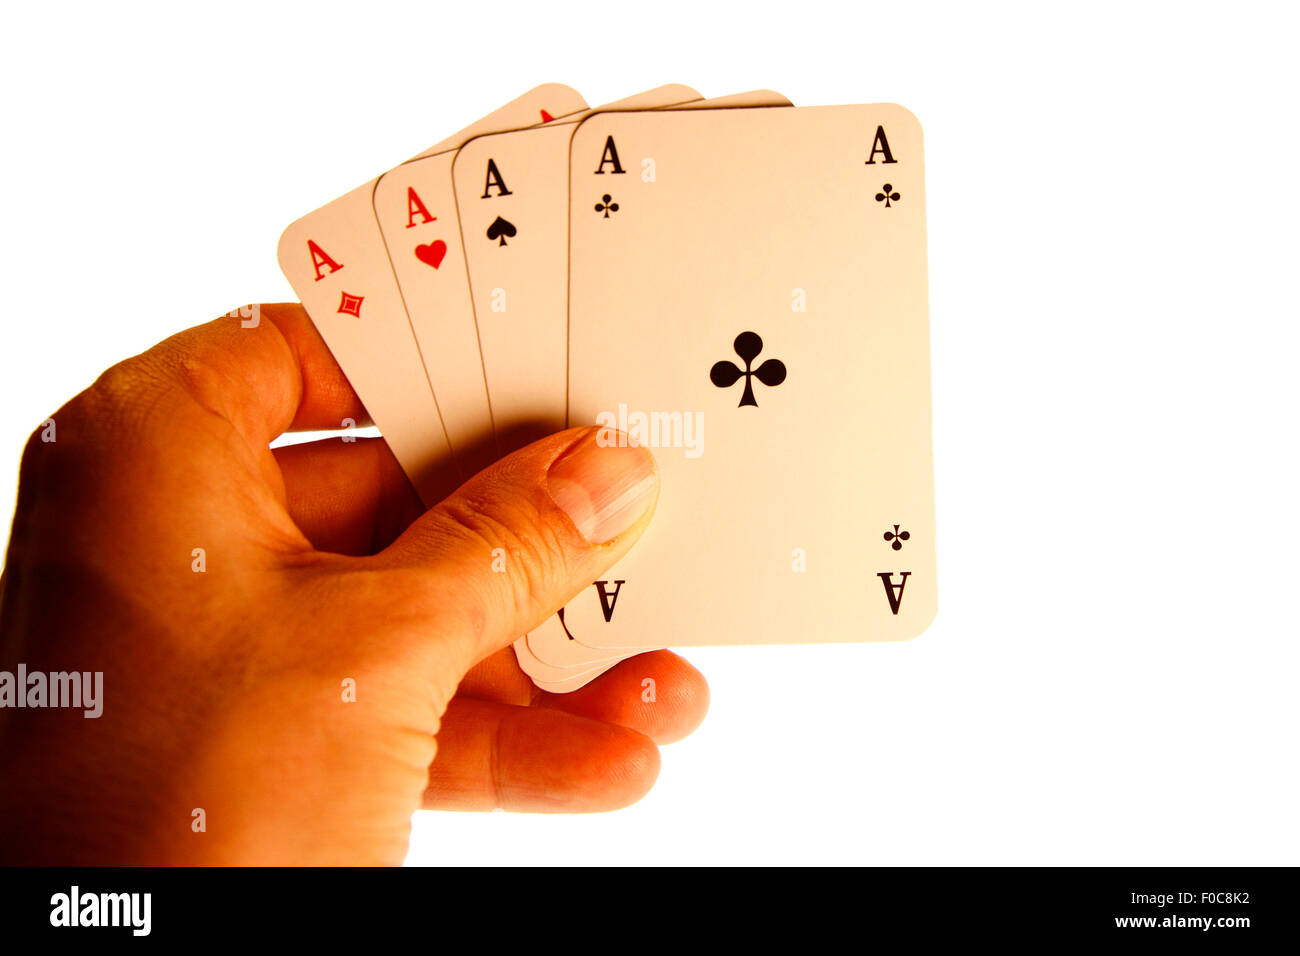 Asse - Symbolbild Kartenspiel/ card game. Stock Photo